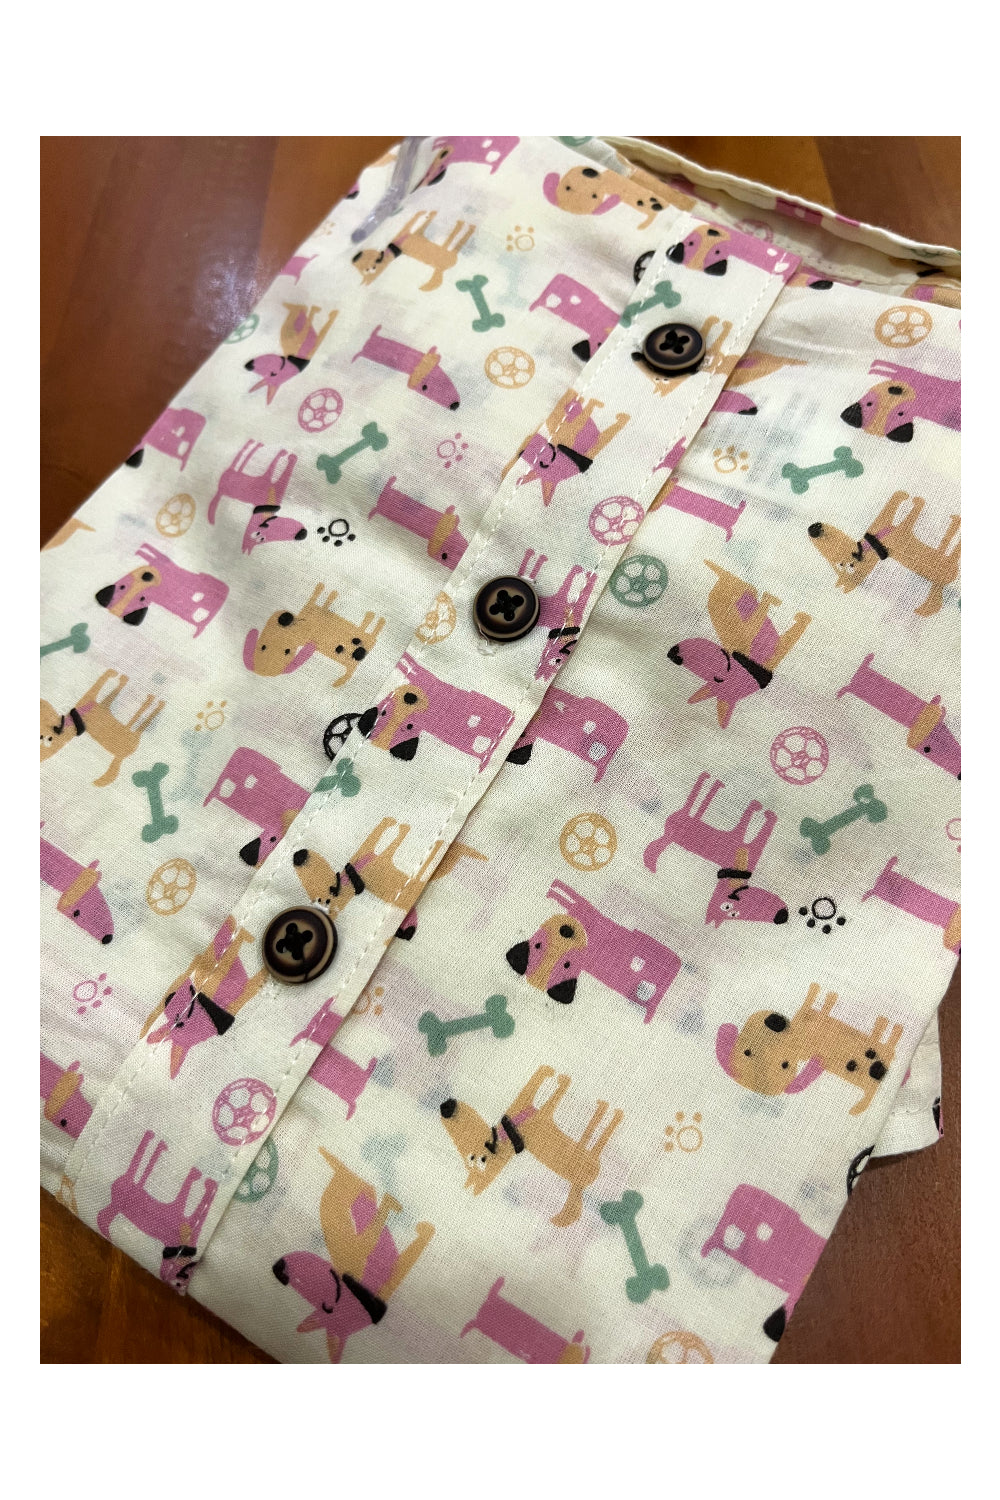 Southloom Jaipur Cotton Dog Hand Block Printed Shirt For Kids (Half Sleeves)